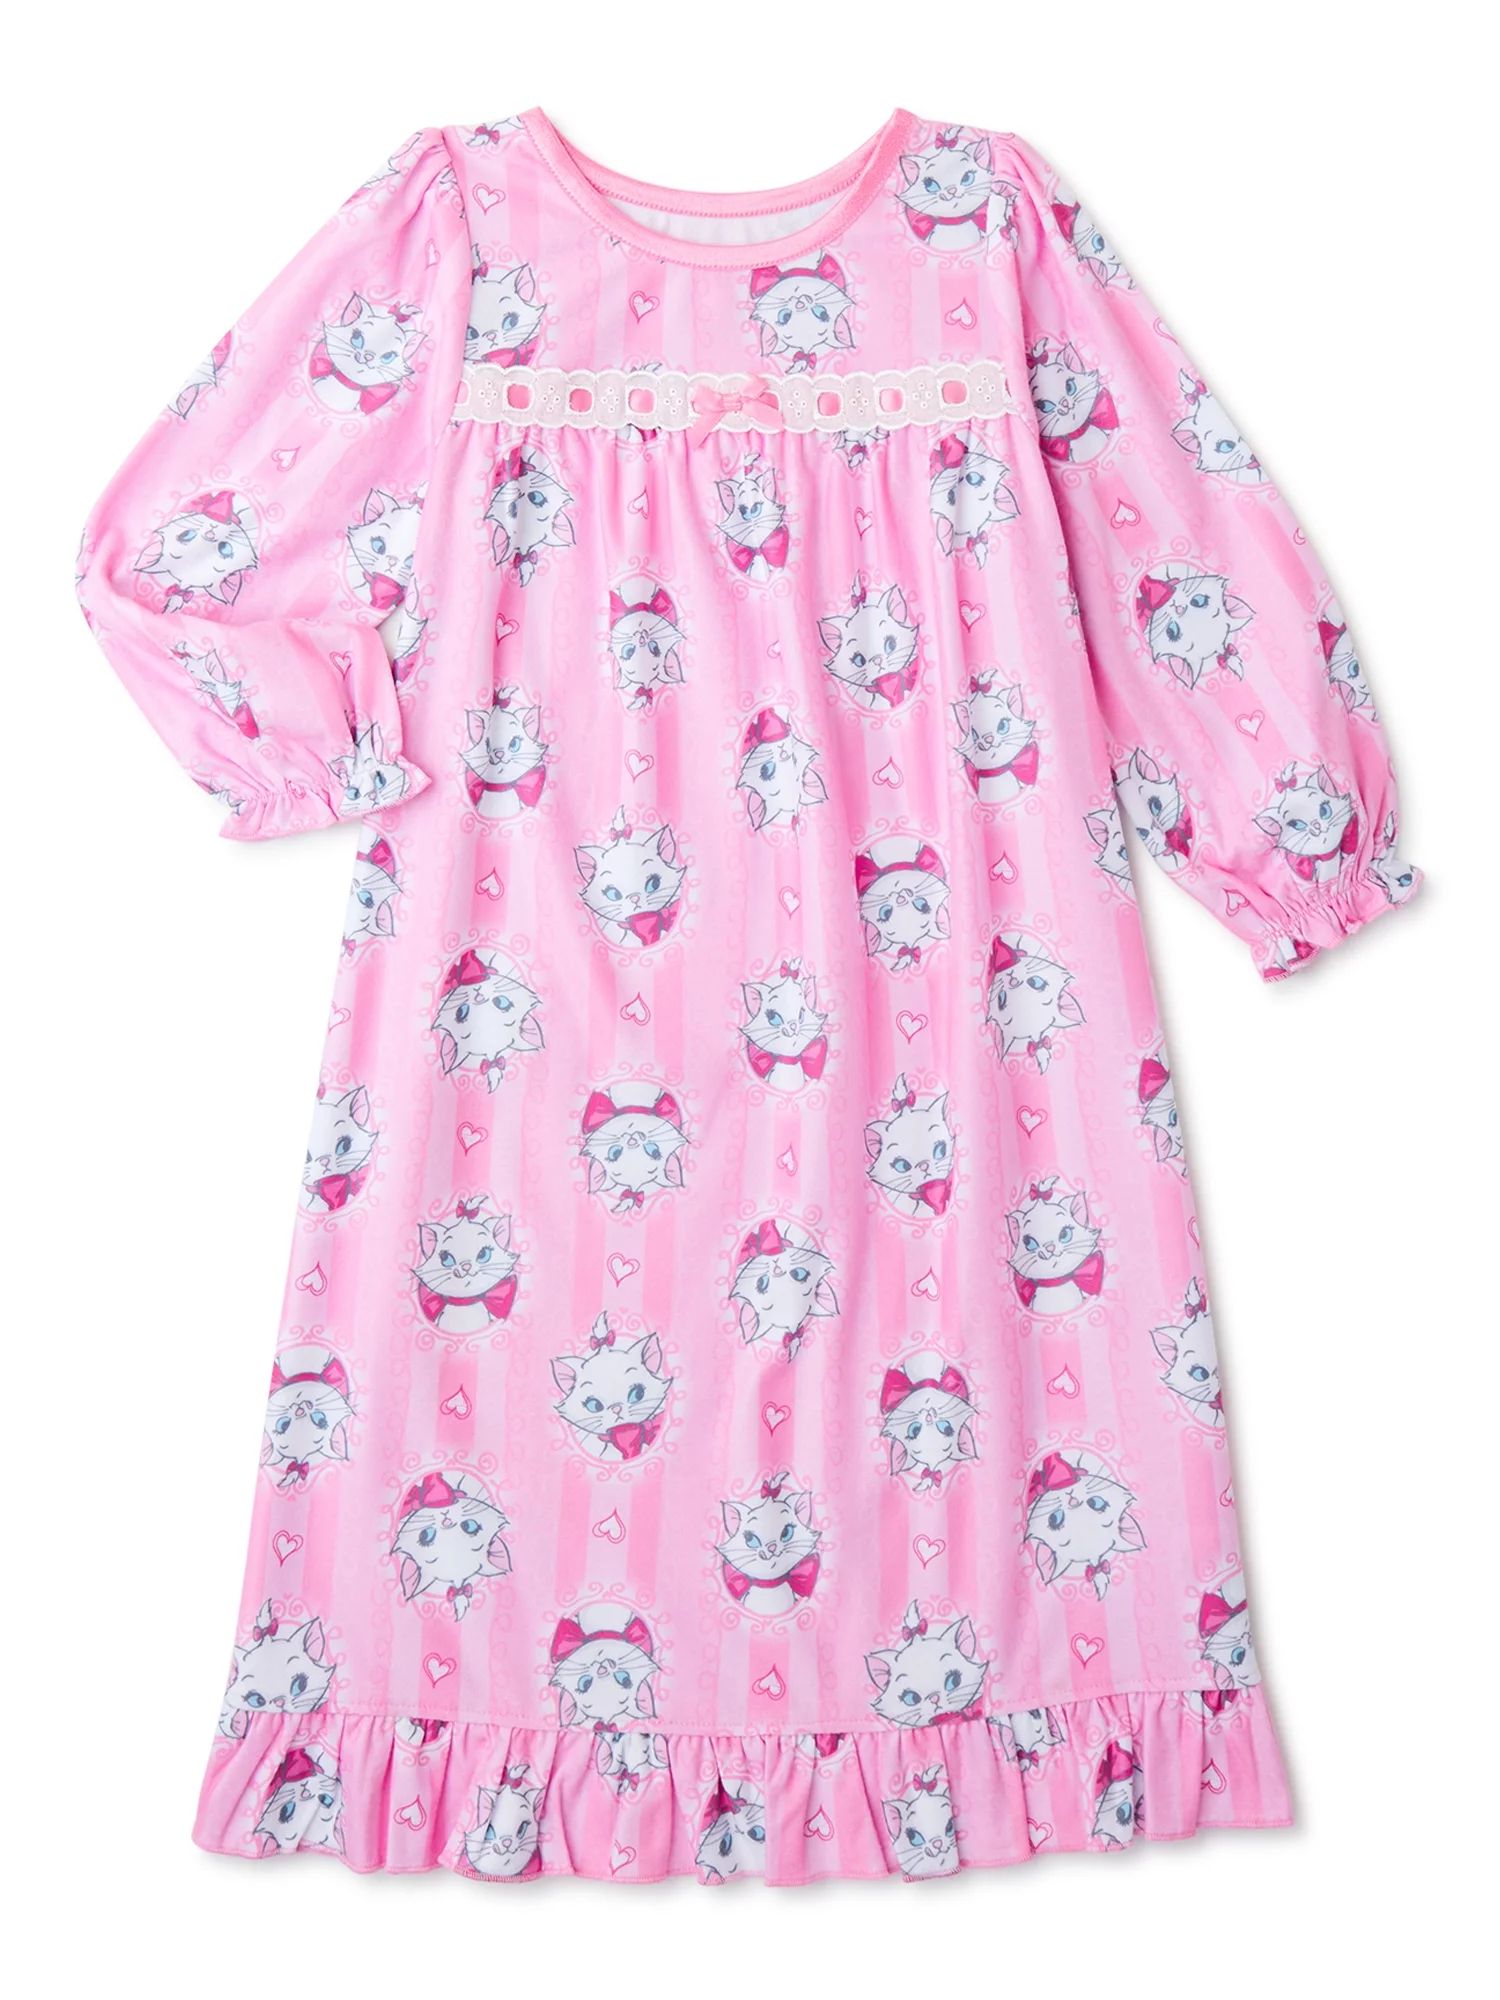 The Aristocats Toddler Girls Pajama Nightgown, Sizes 2T-5T | Walmart (US)